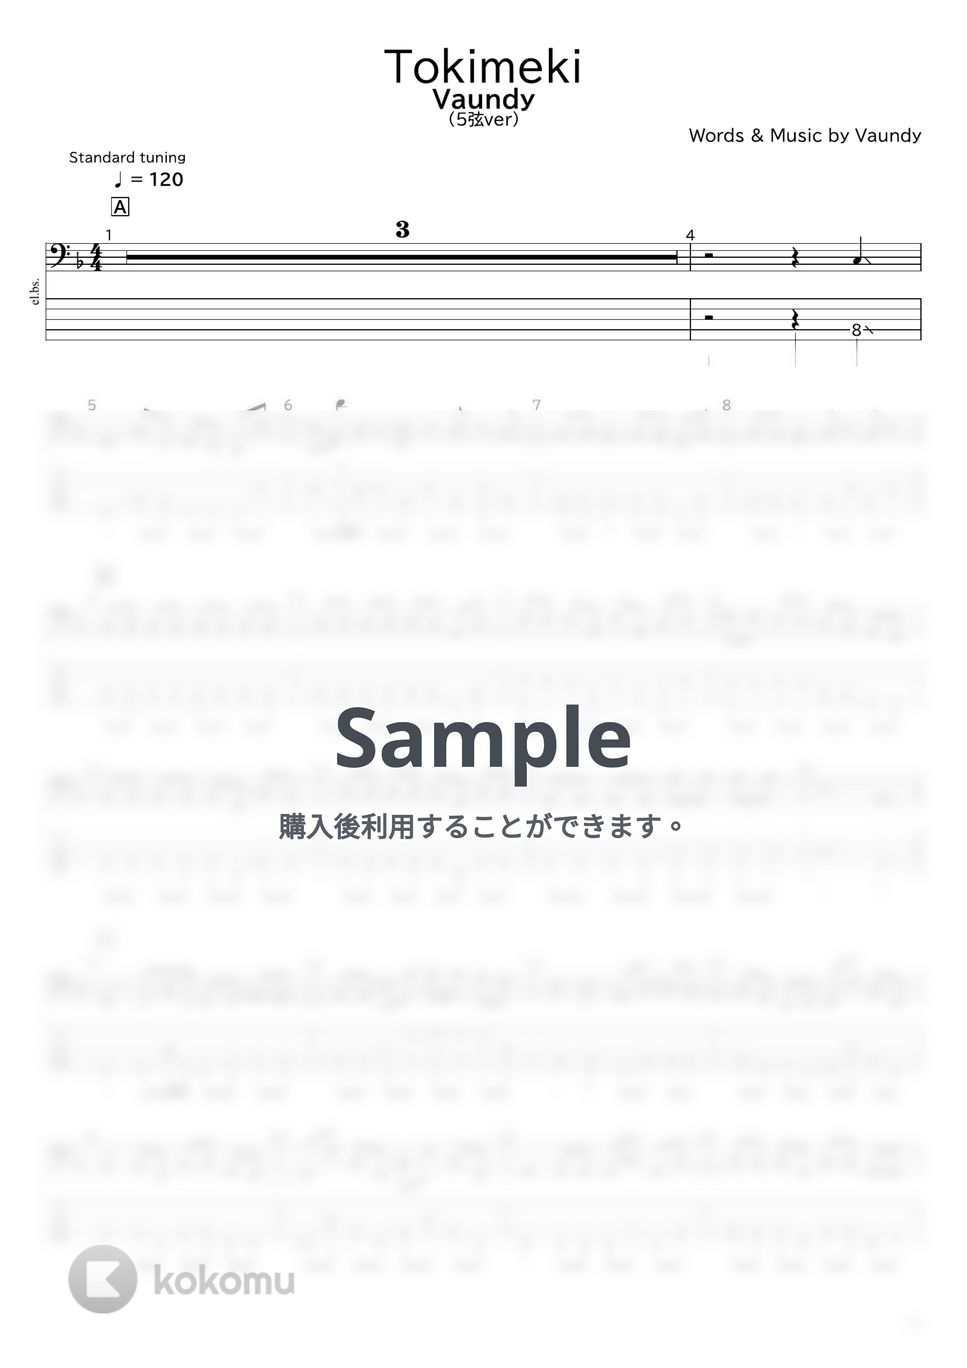 Vaundy - Tokimeki(5弦ver) by たぶべー@財布に優しいベース用楽譜屋さん